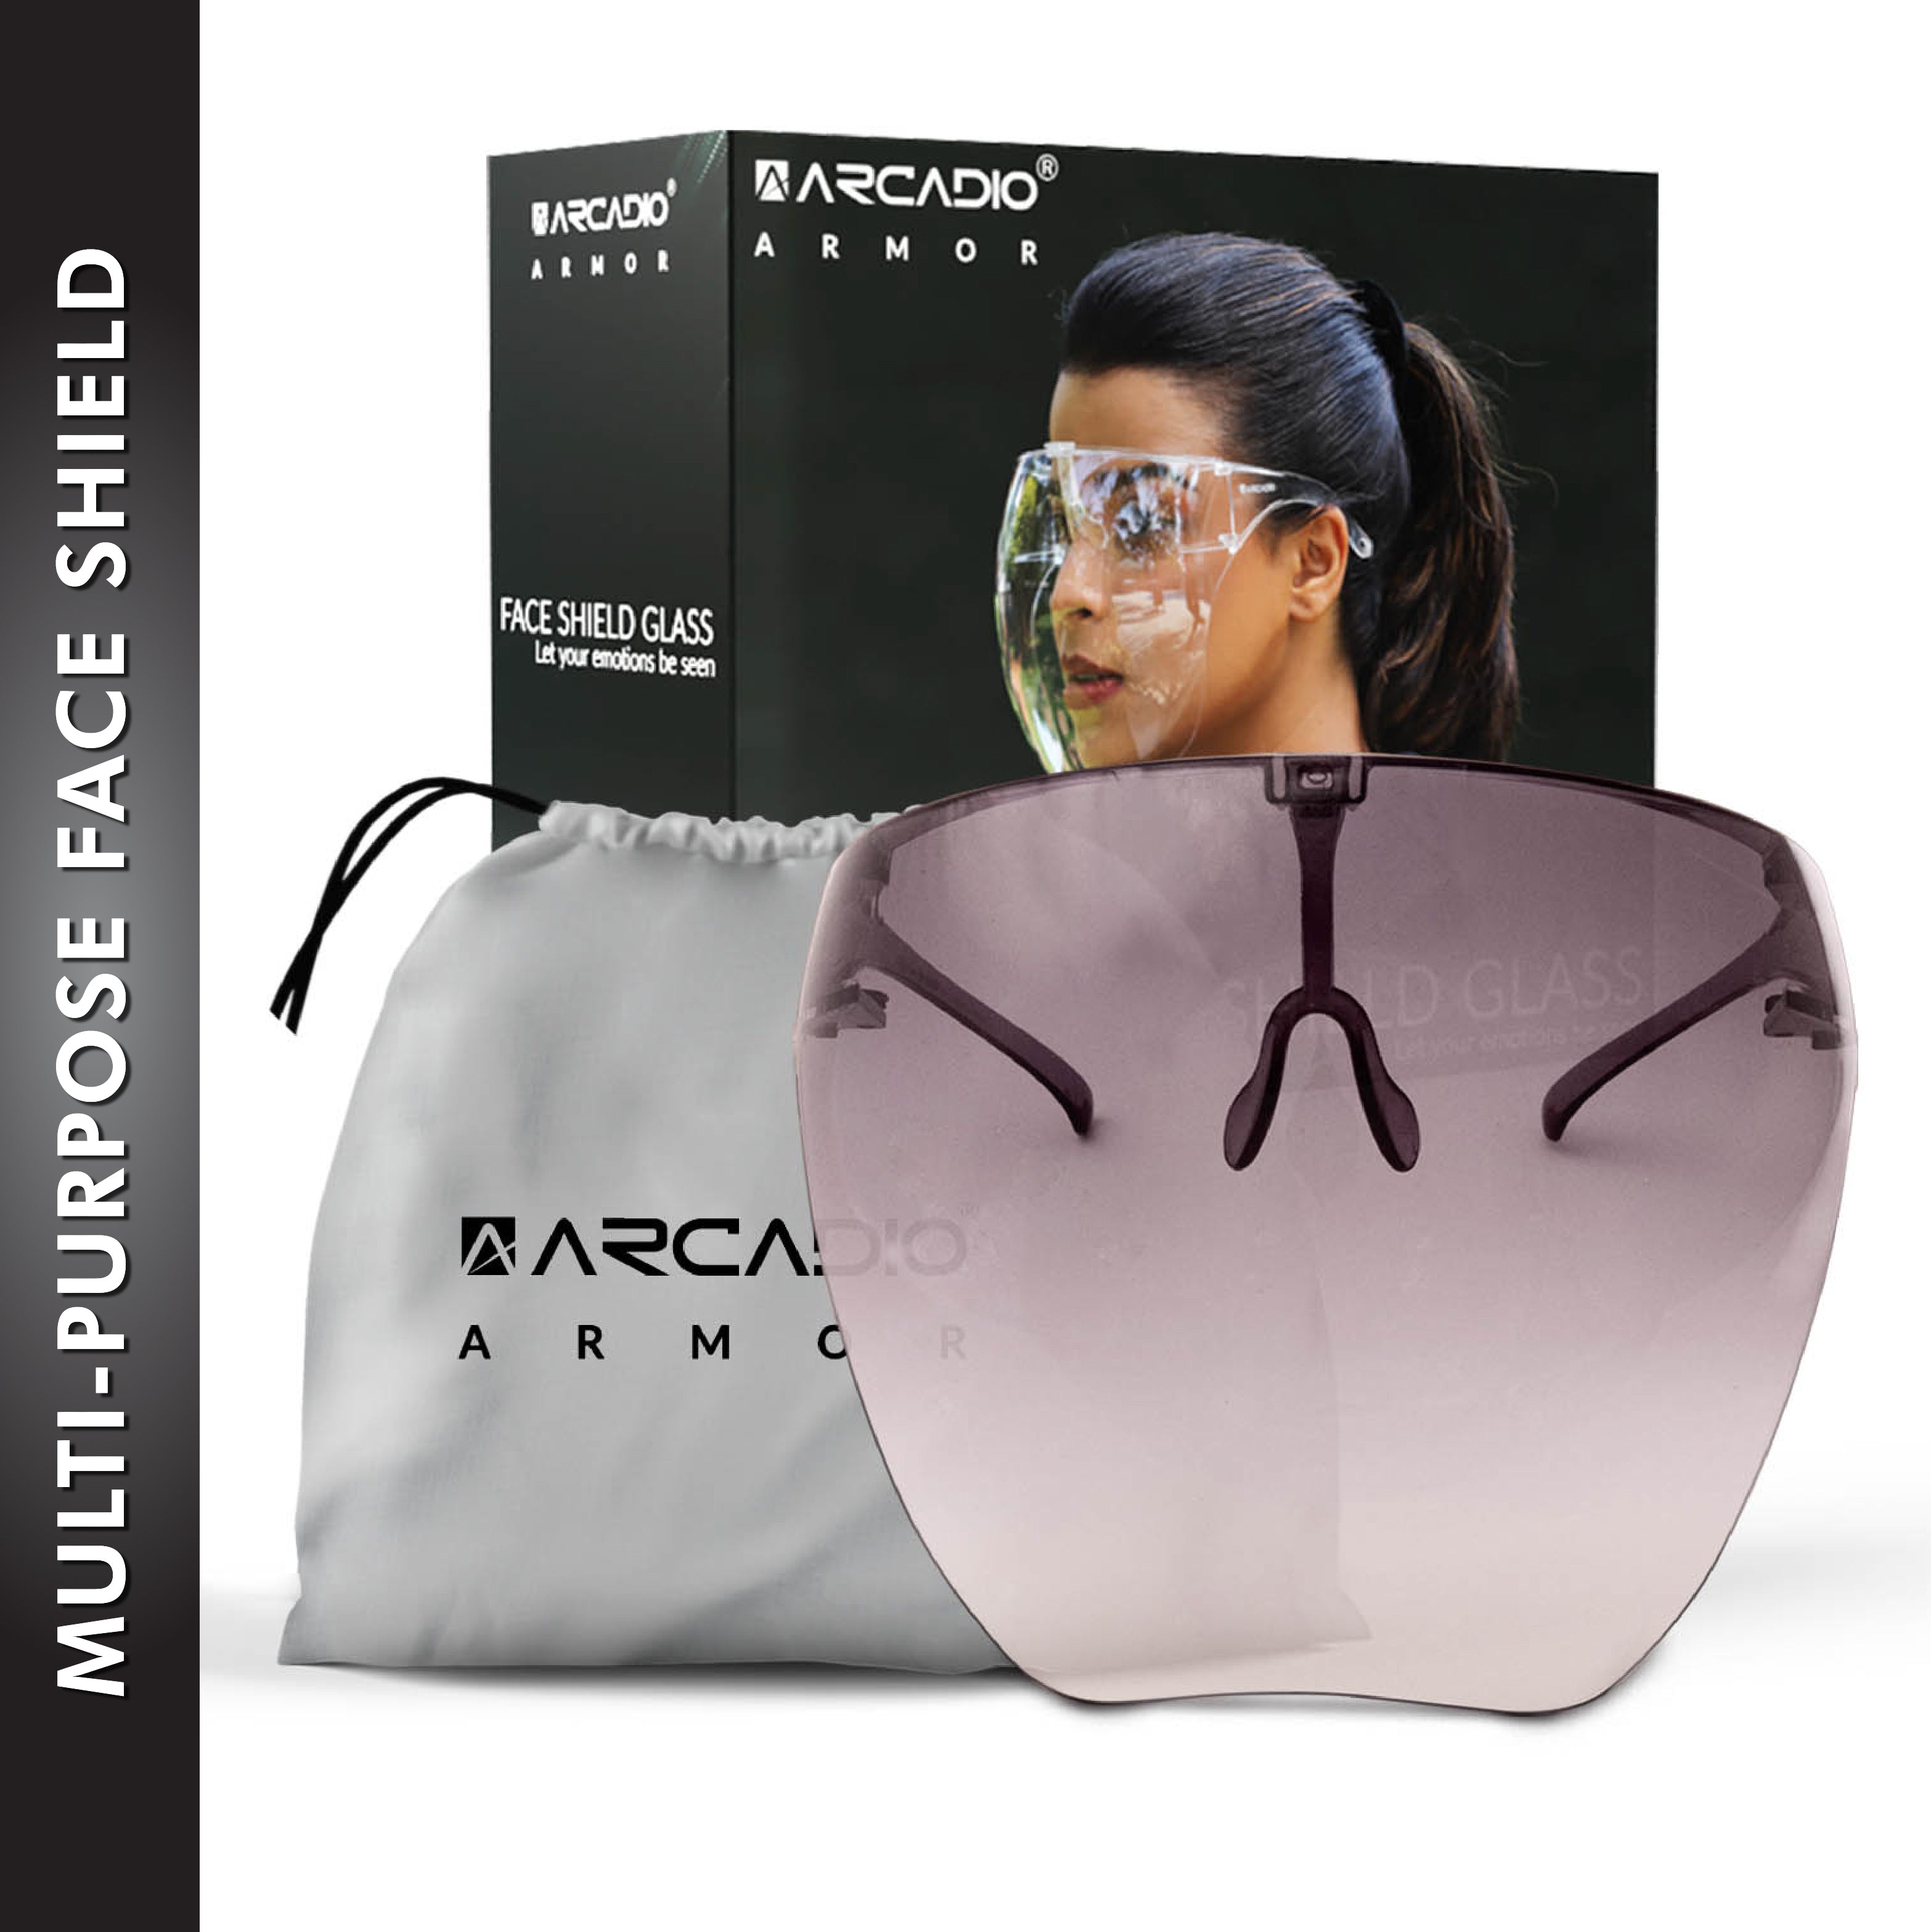 ARCADIO Armor - Multipurpose Face Shield Glass - Grey ARCADIO